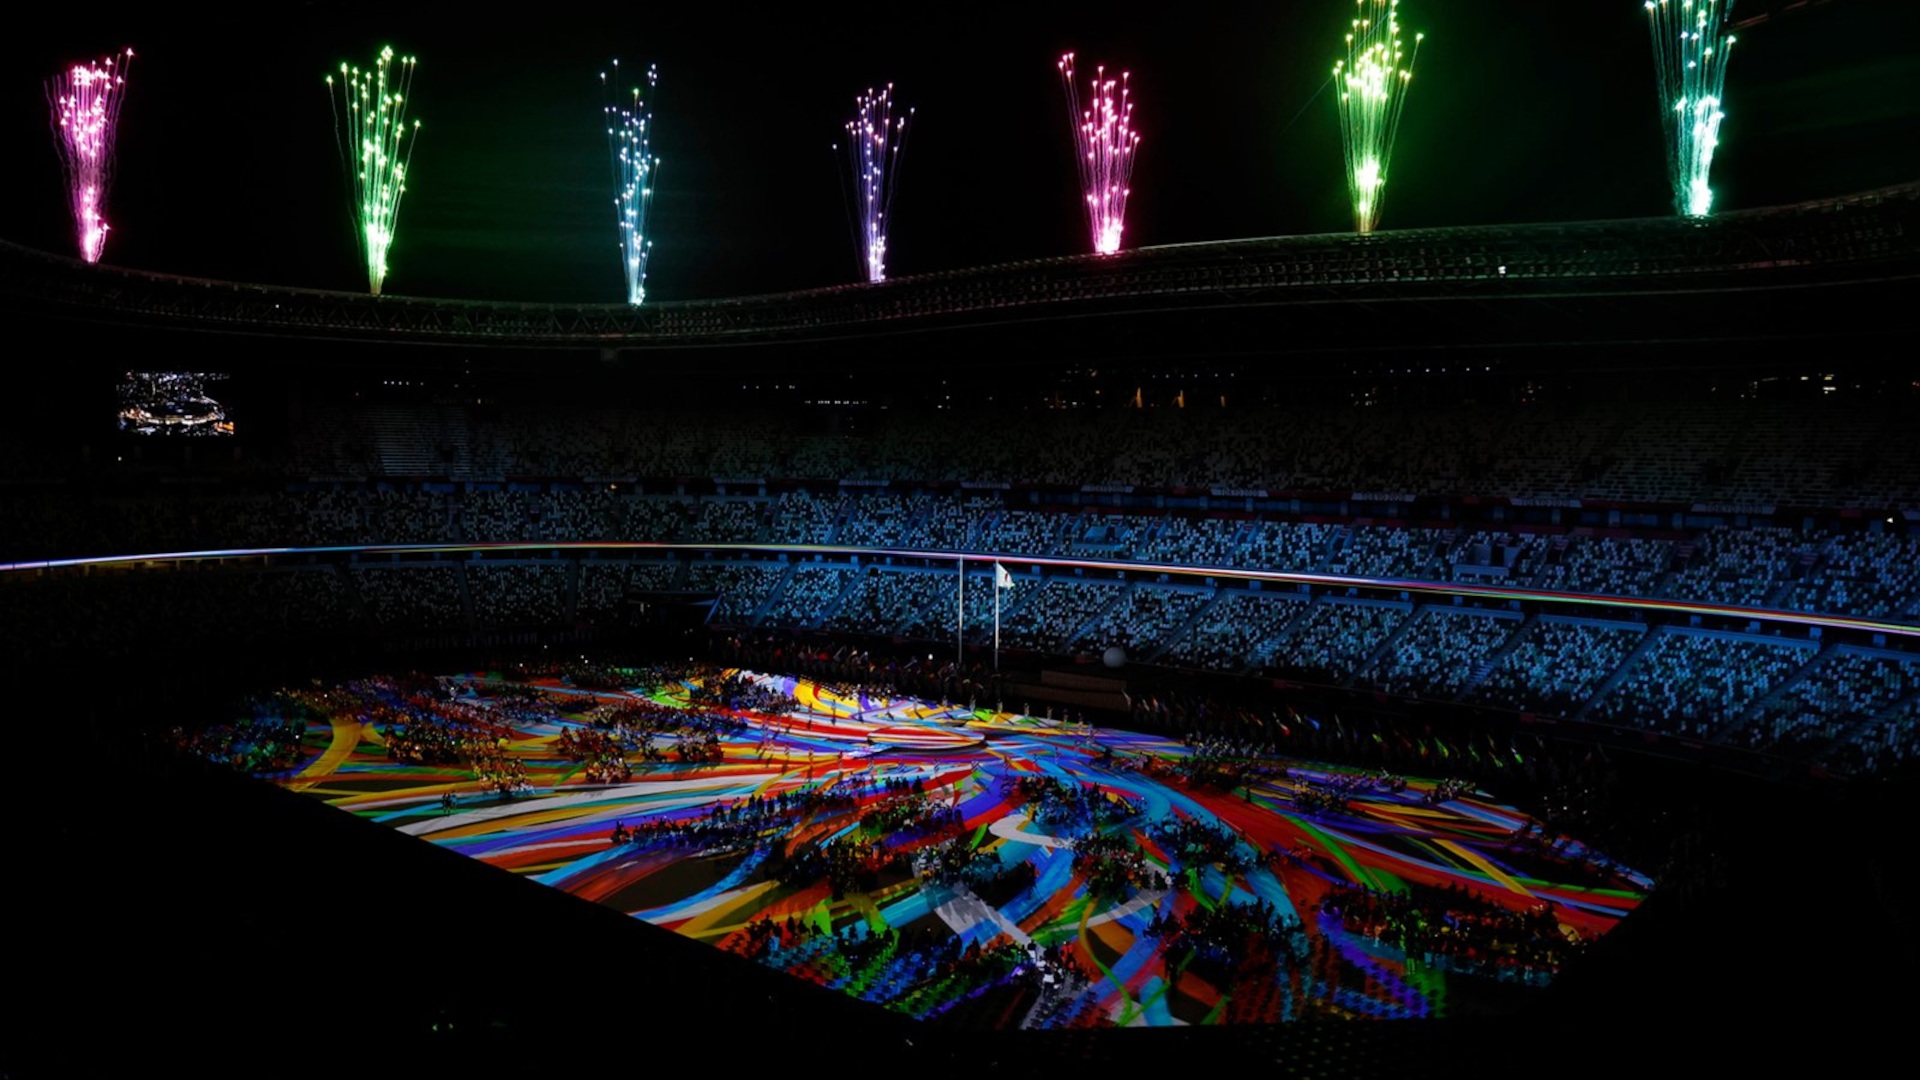 Panasonic projectors at Tokyo 2020 Olympics (Image: IOC/Panasonic)